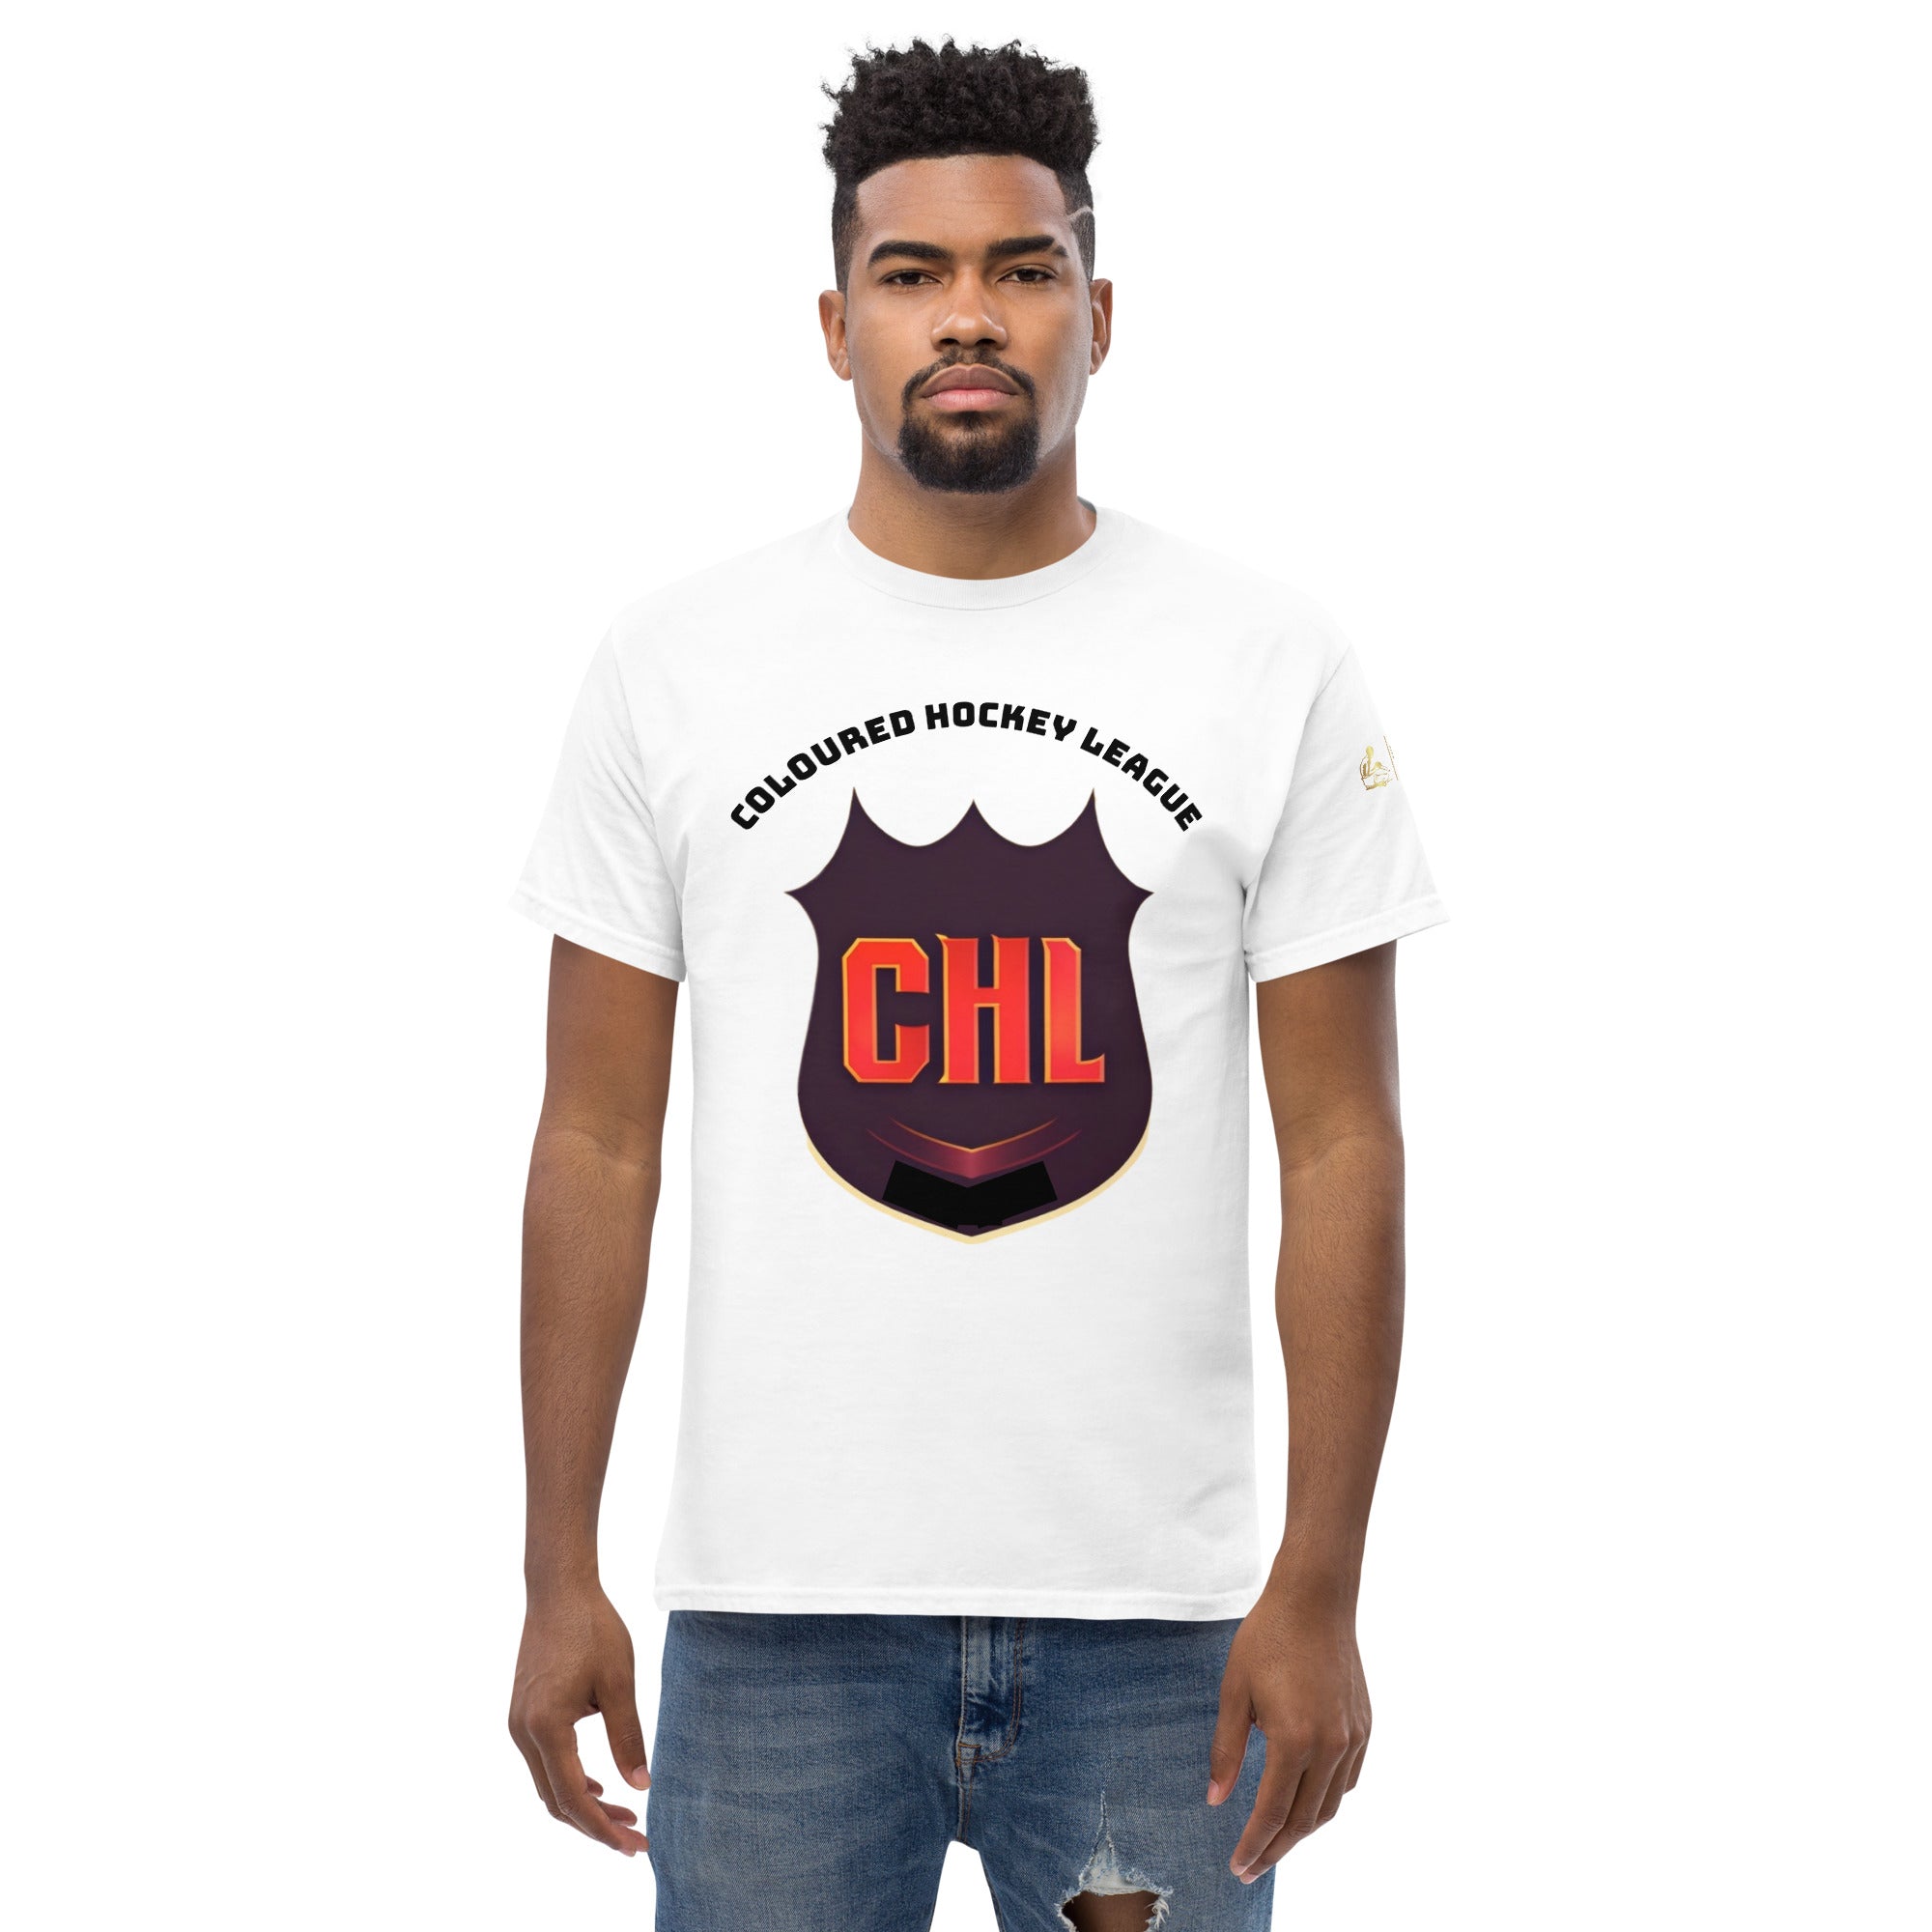 CHL - Men's classic tee